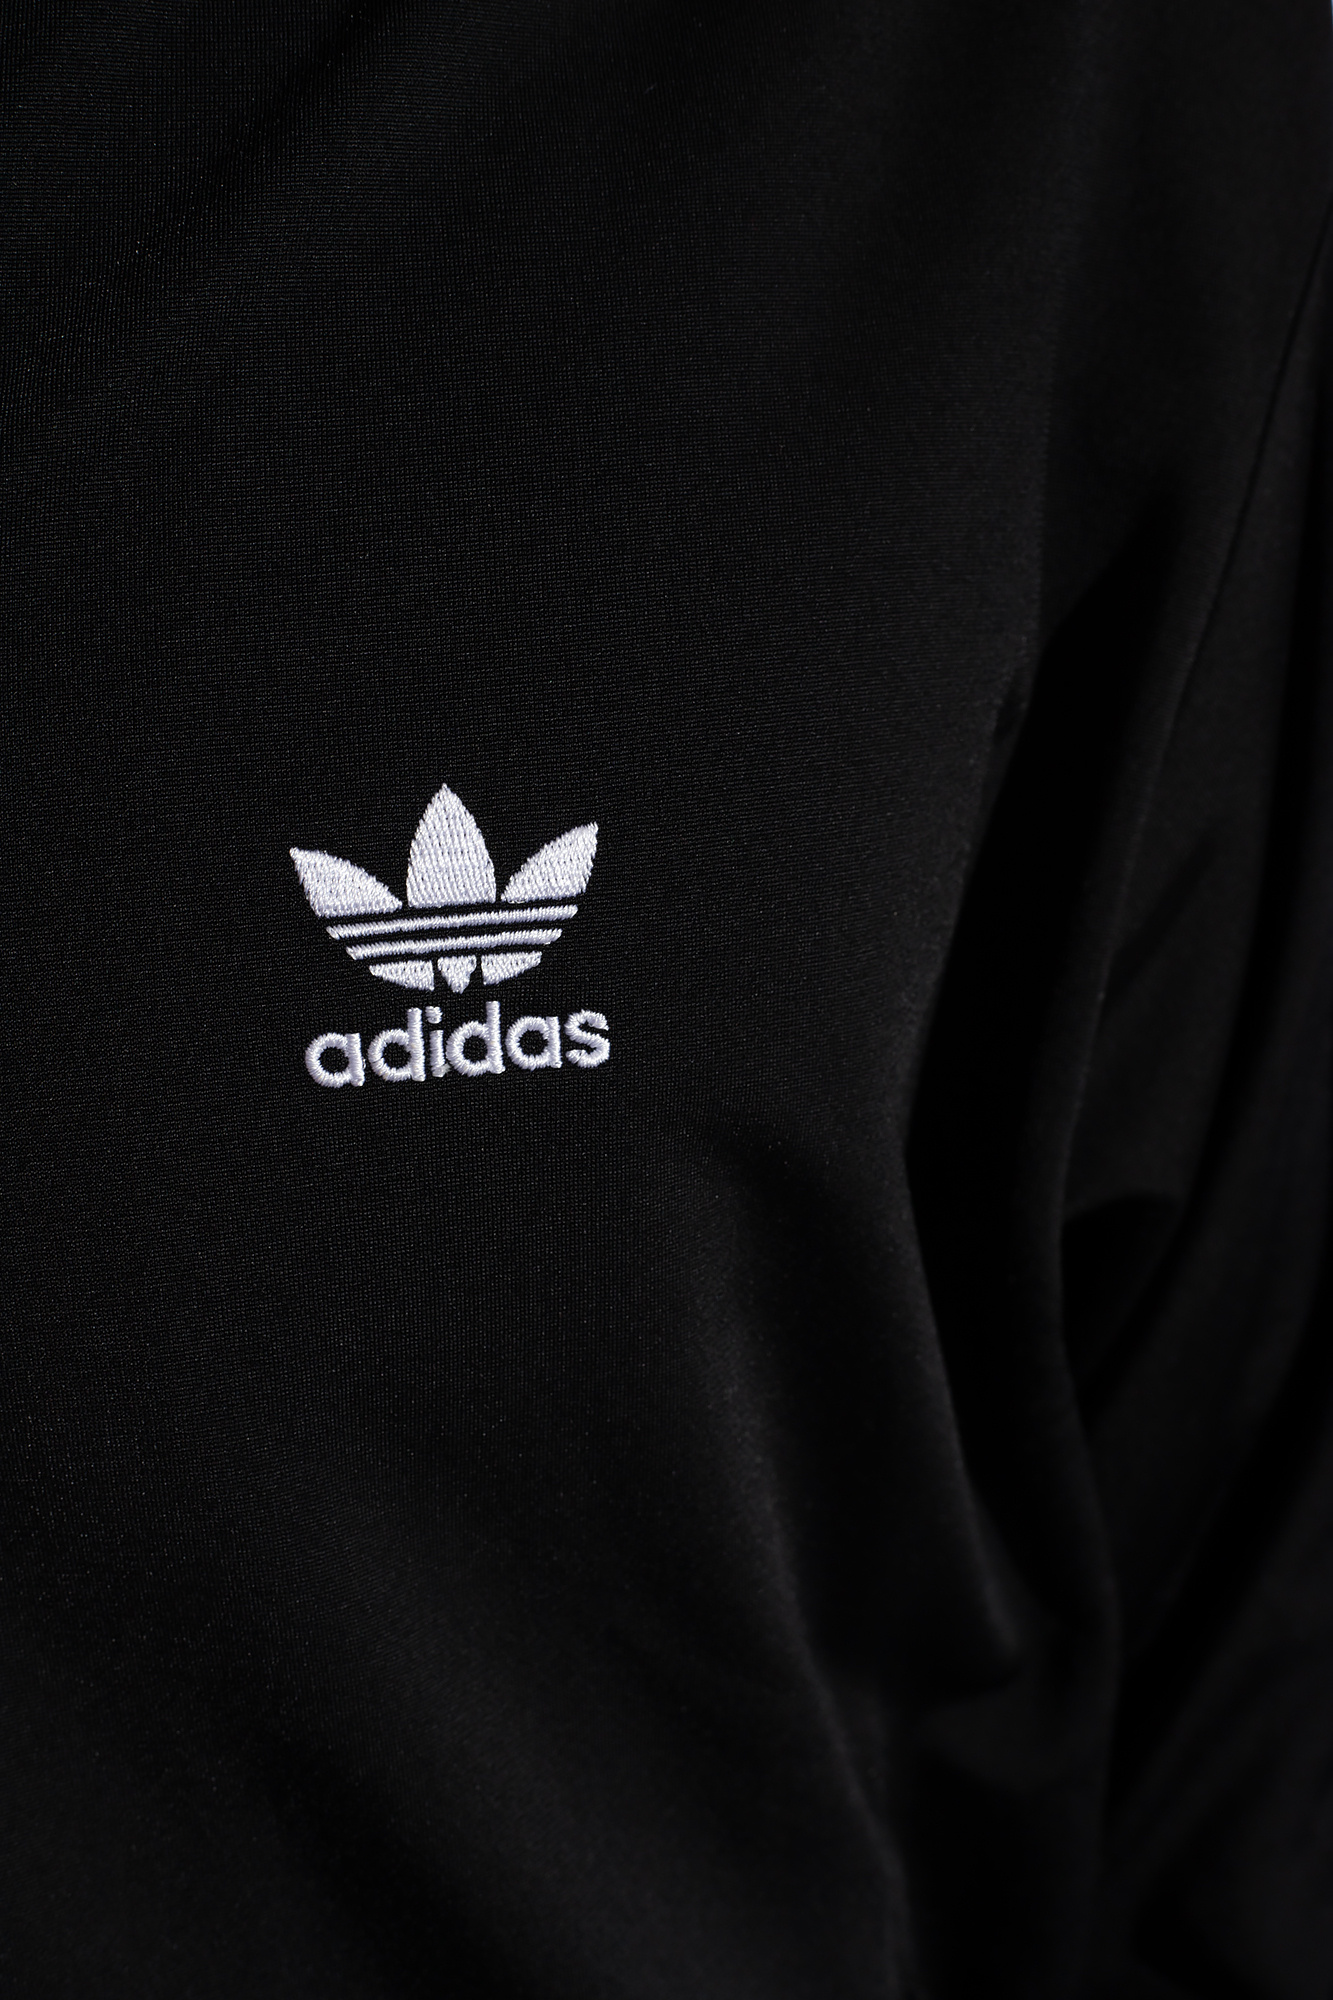 ADIDAS Originals Sweatshirt with logo | Men's Clothing | Vitkac